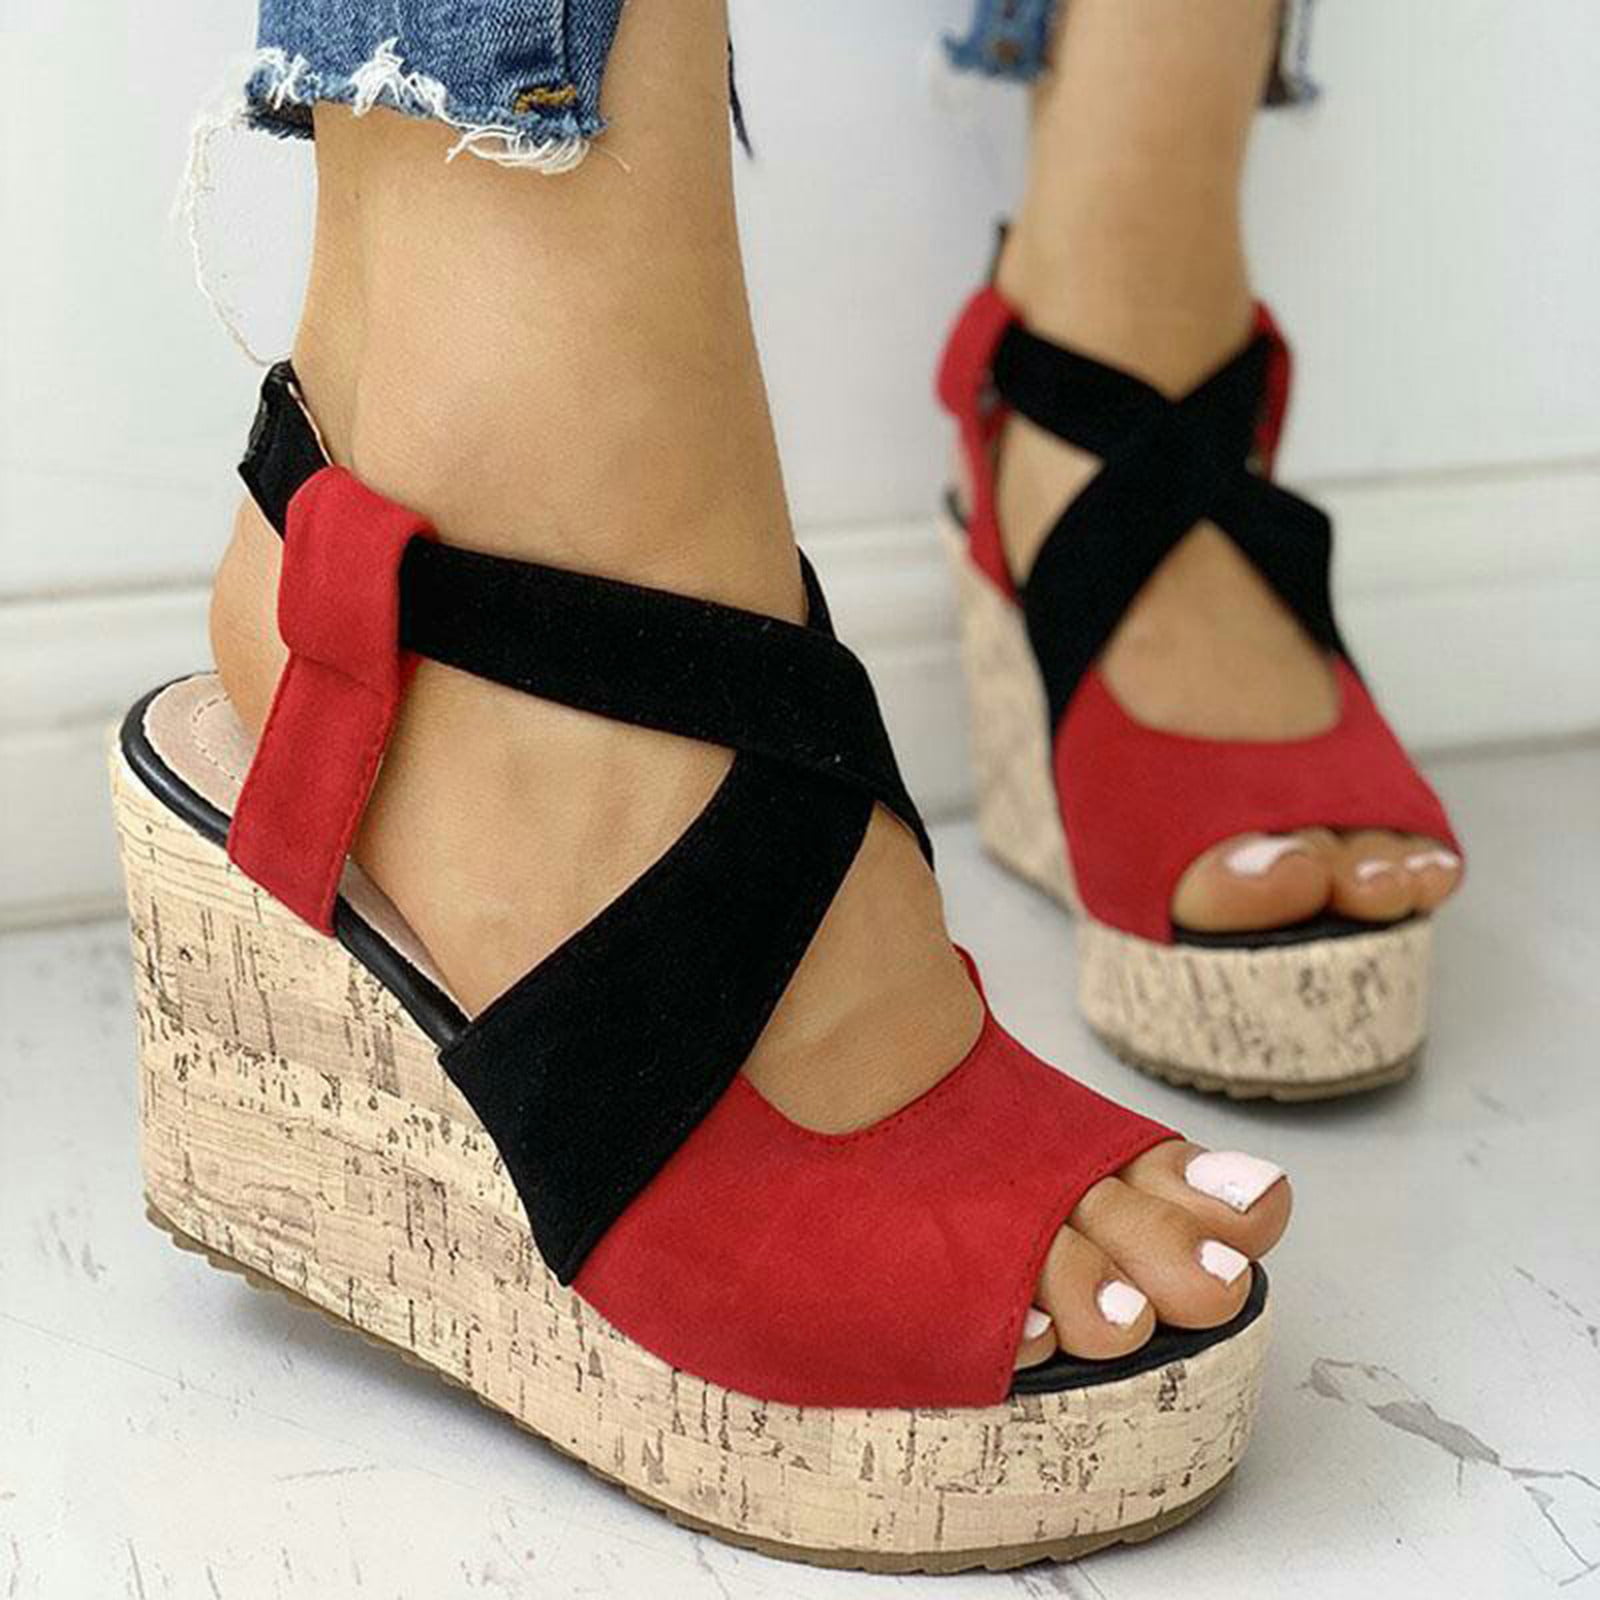 Jsaierl Women Summer Ankle Boots Wedge Sandal Dress Sandals Slip on Open Toe Platform Sandals Shoes, Women's, Size: 9, Red